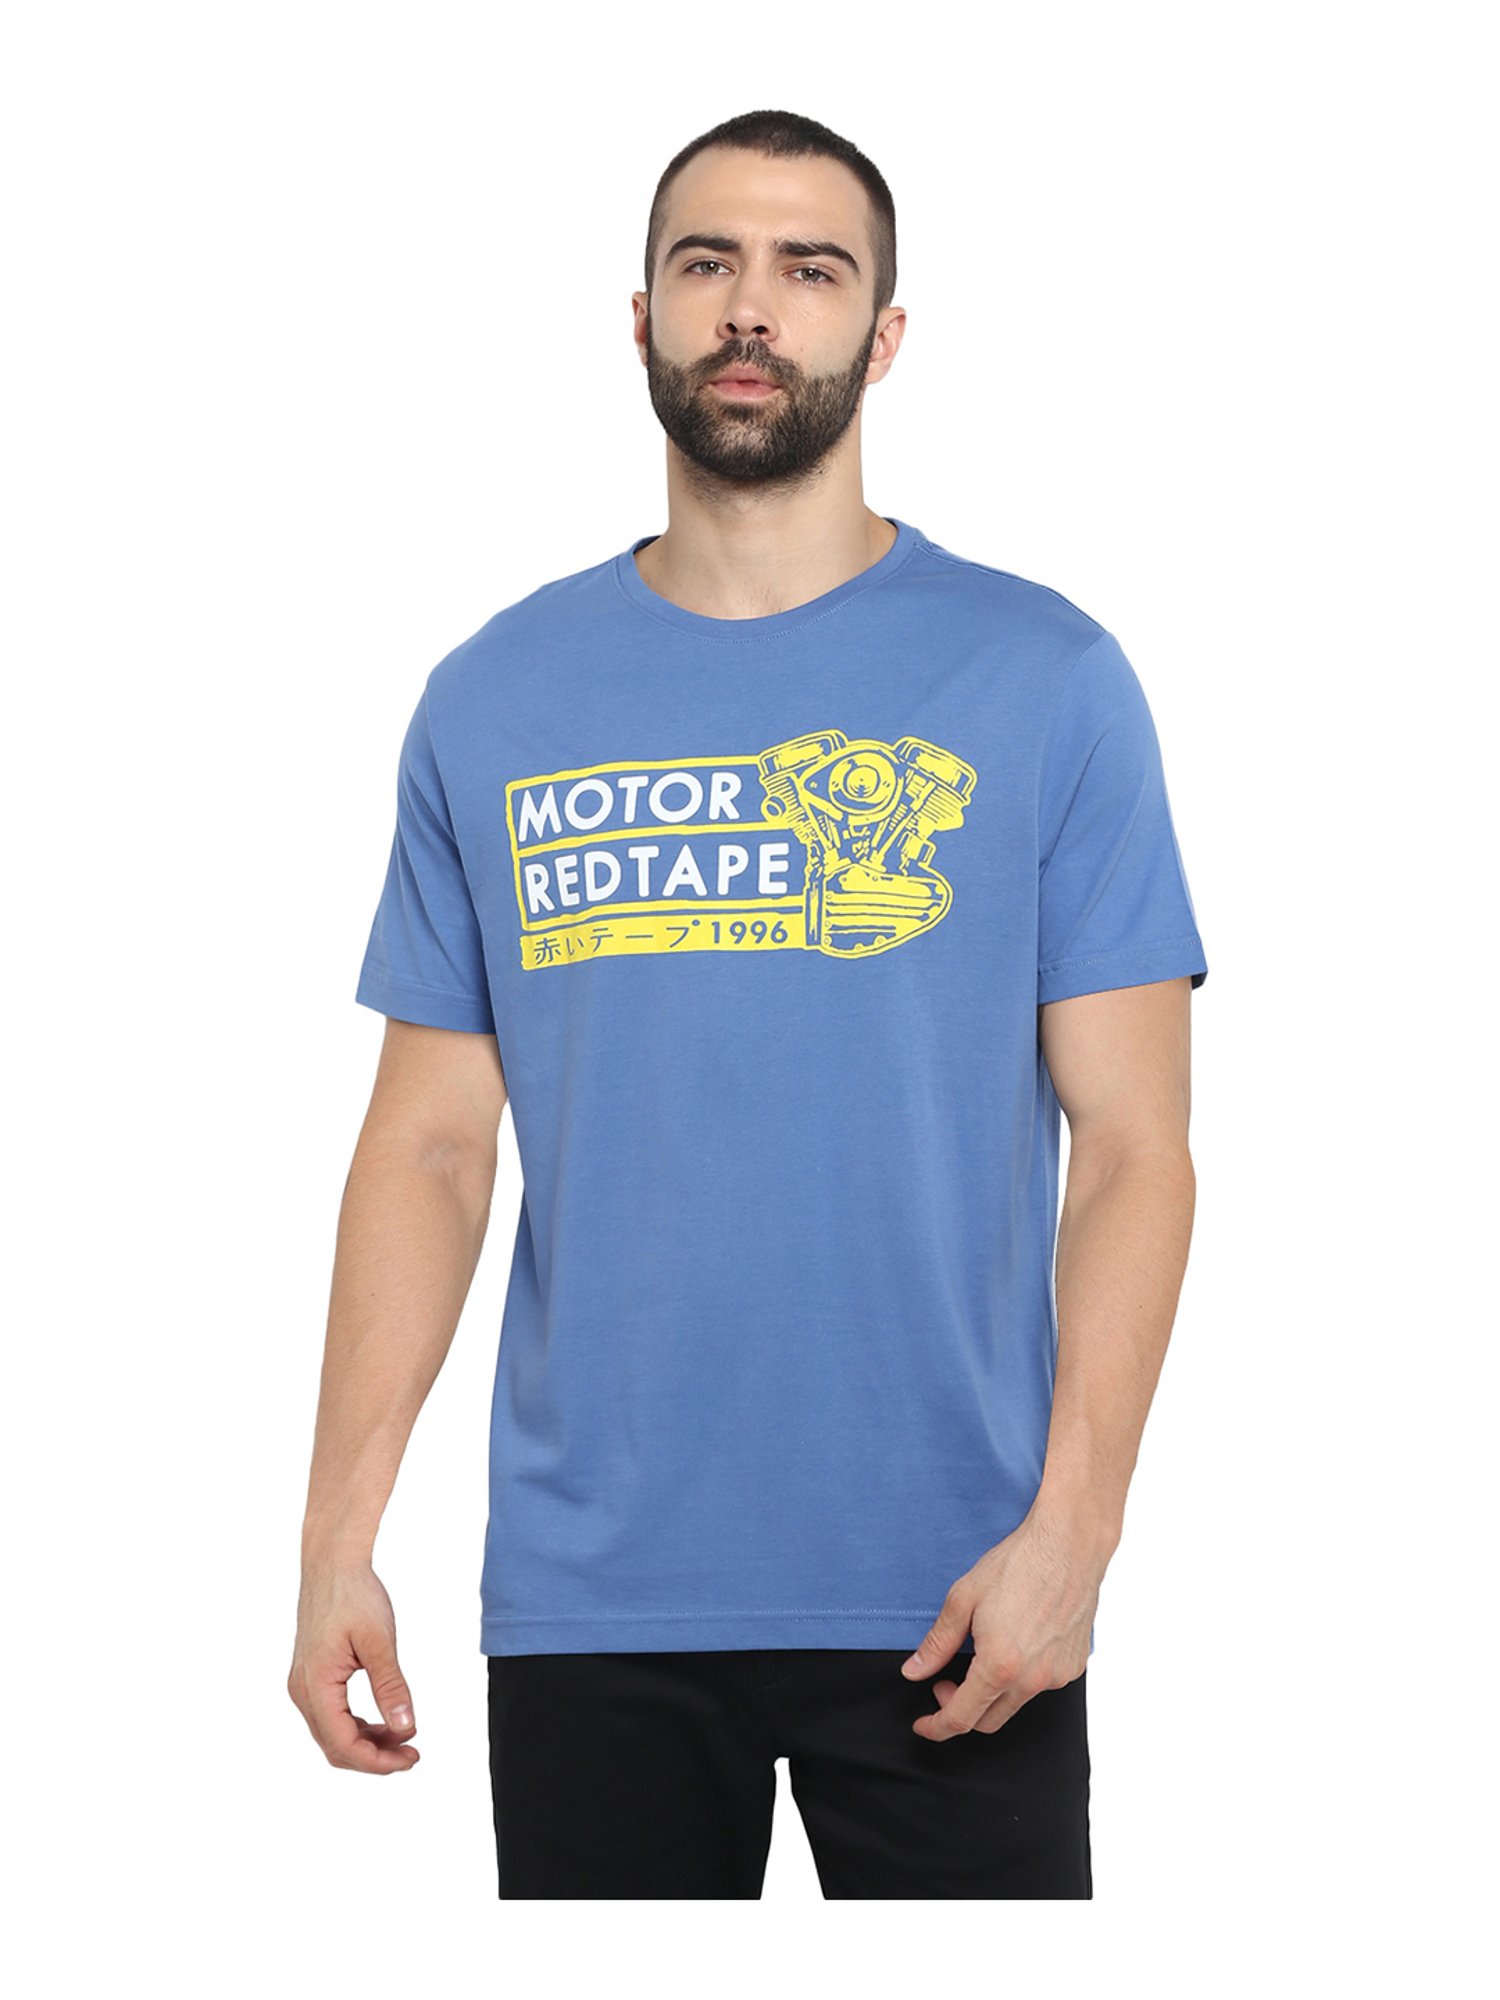 tata motors shirt online